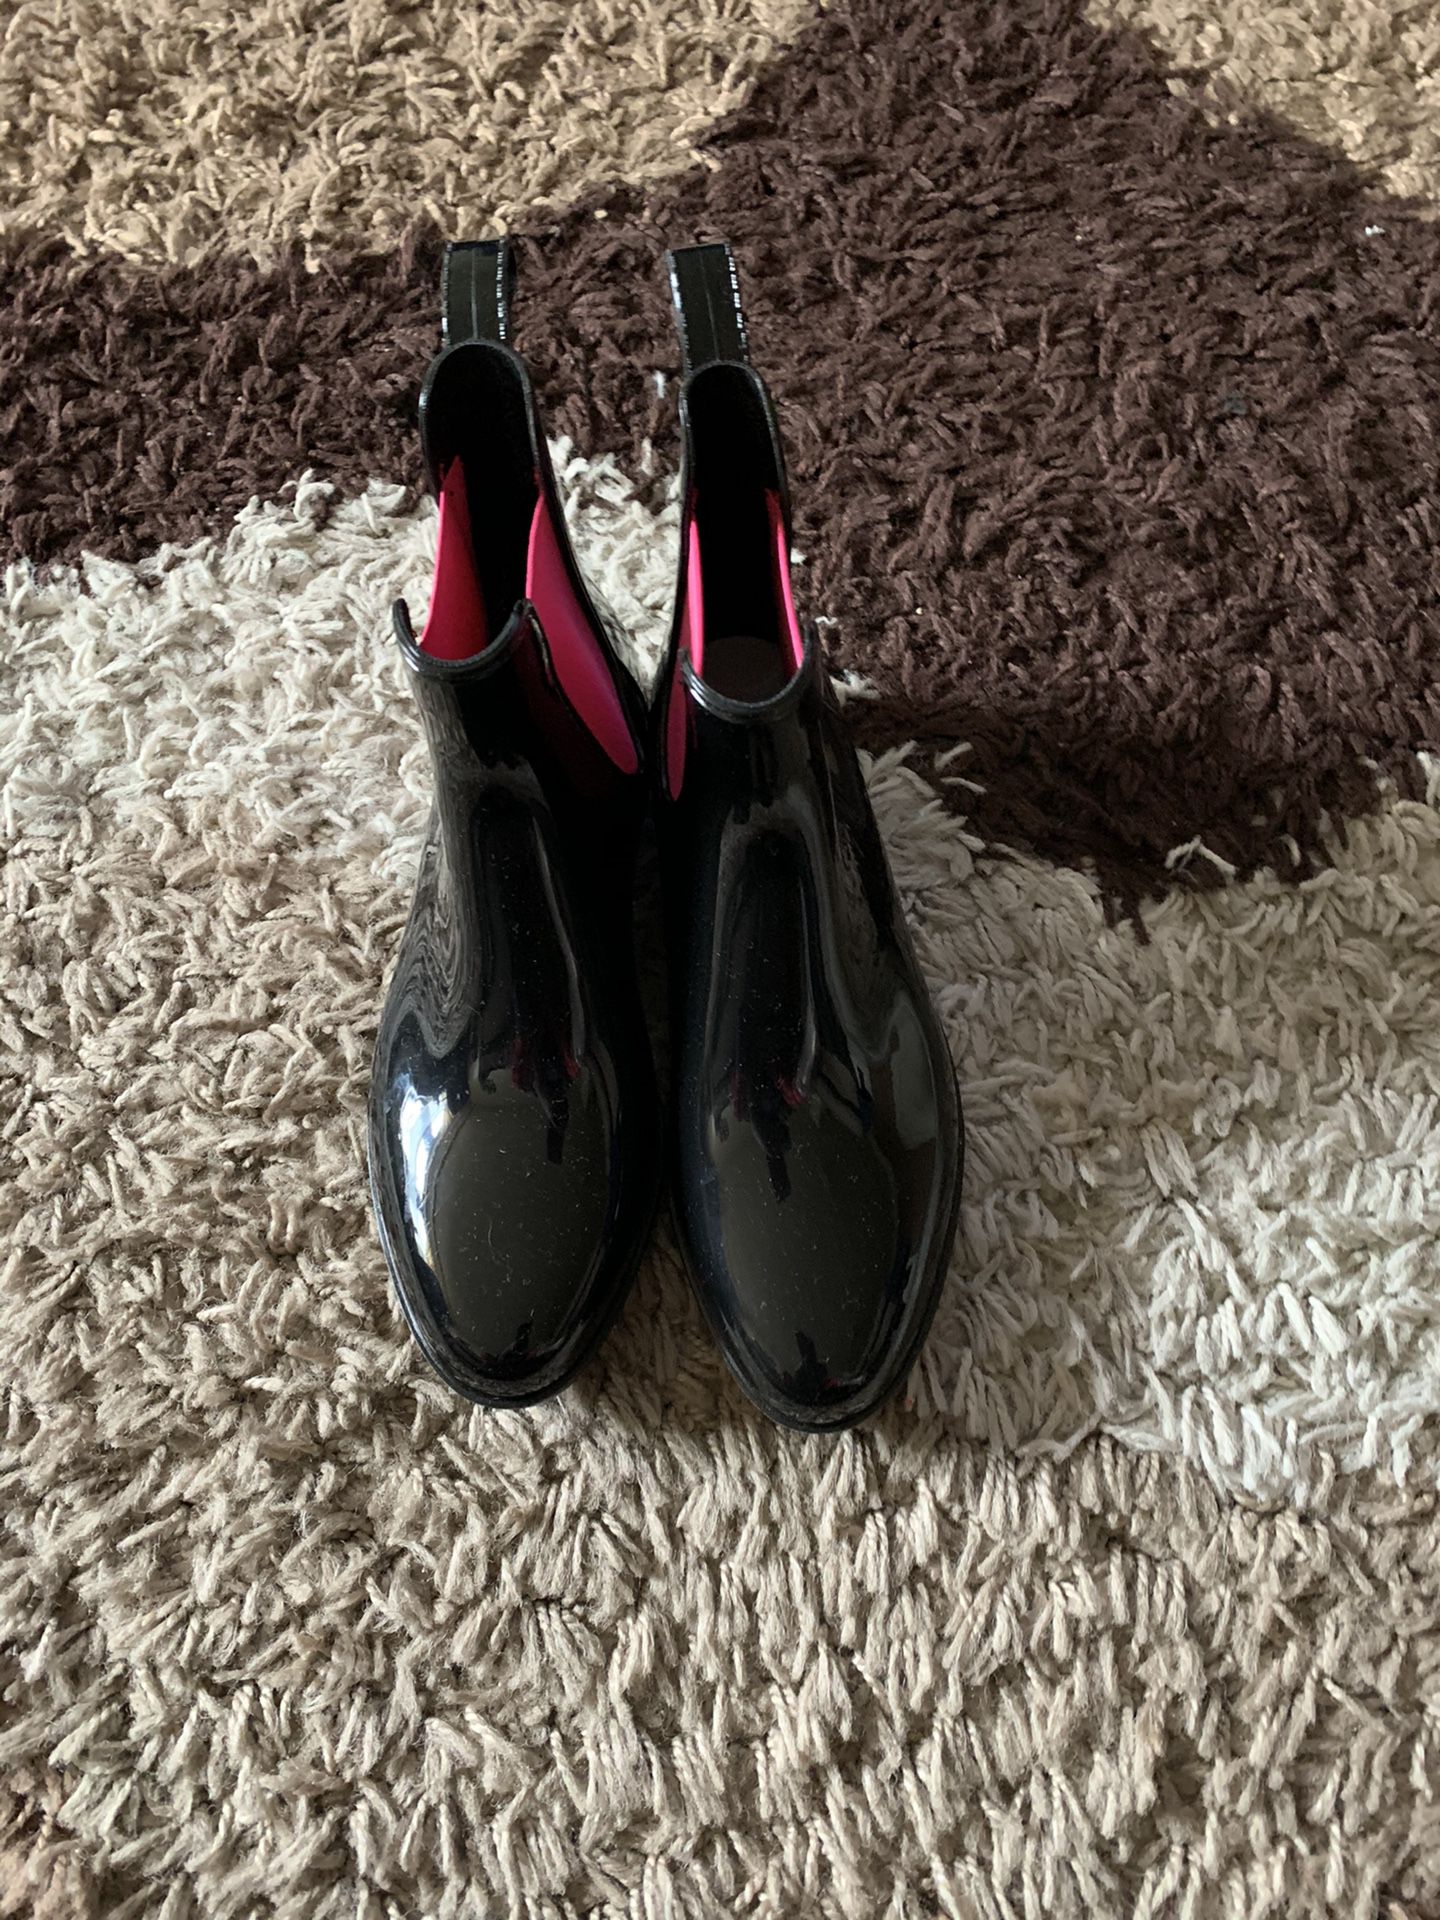 Women’s size 6 rain boots